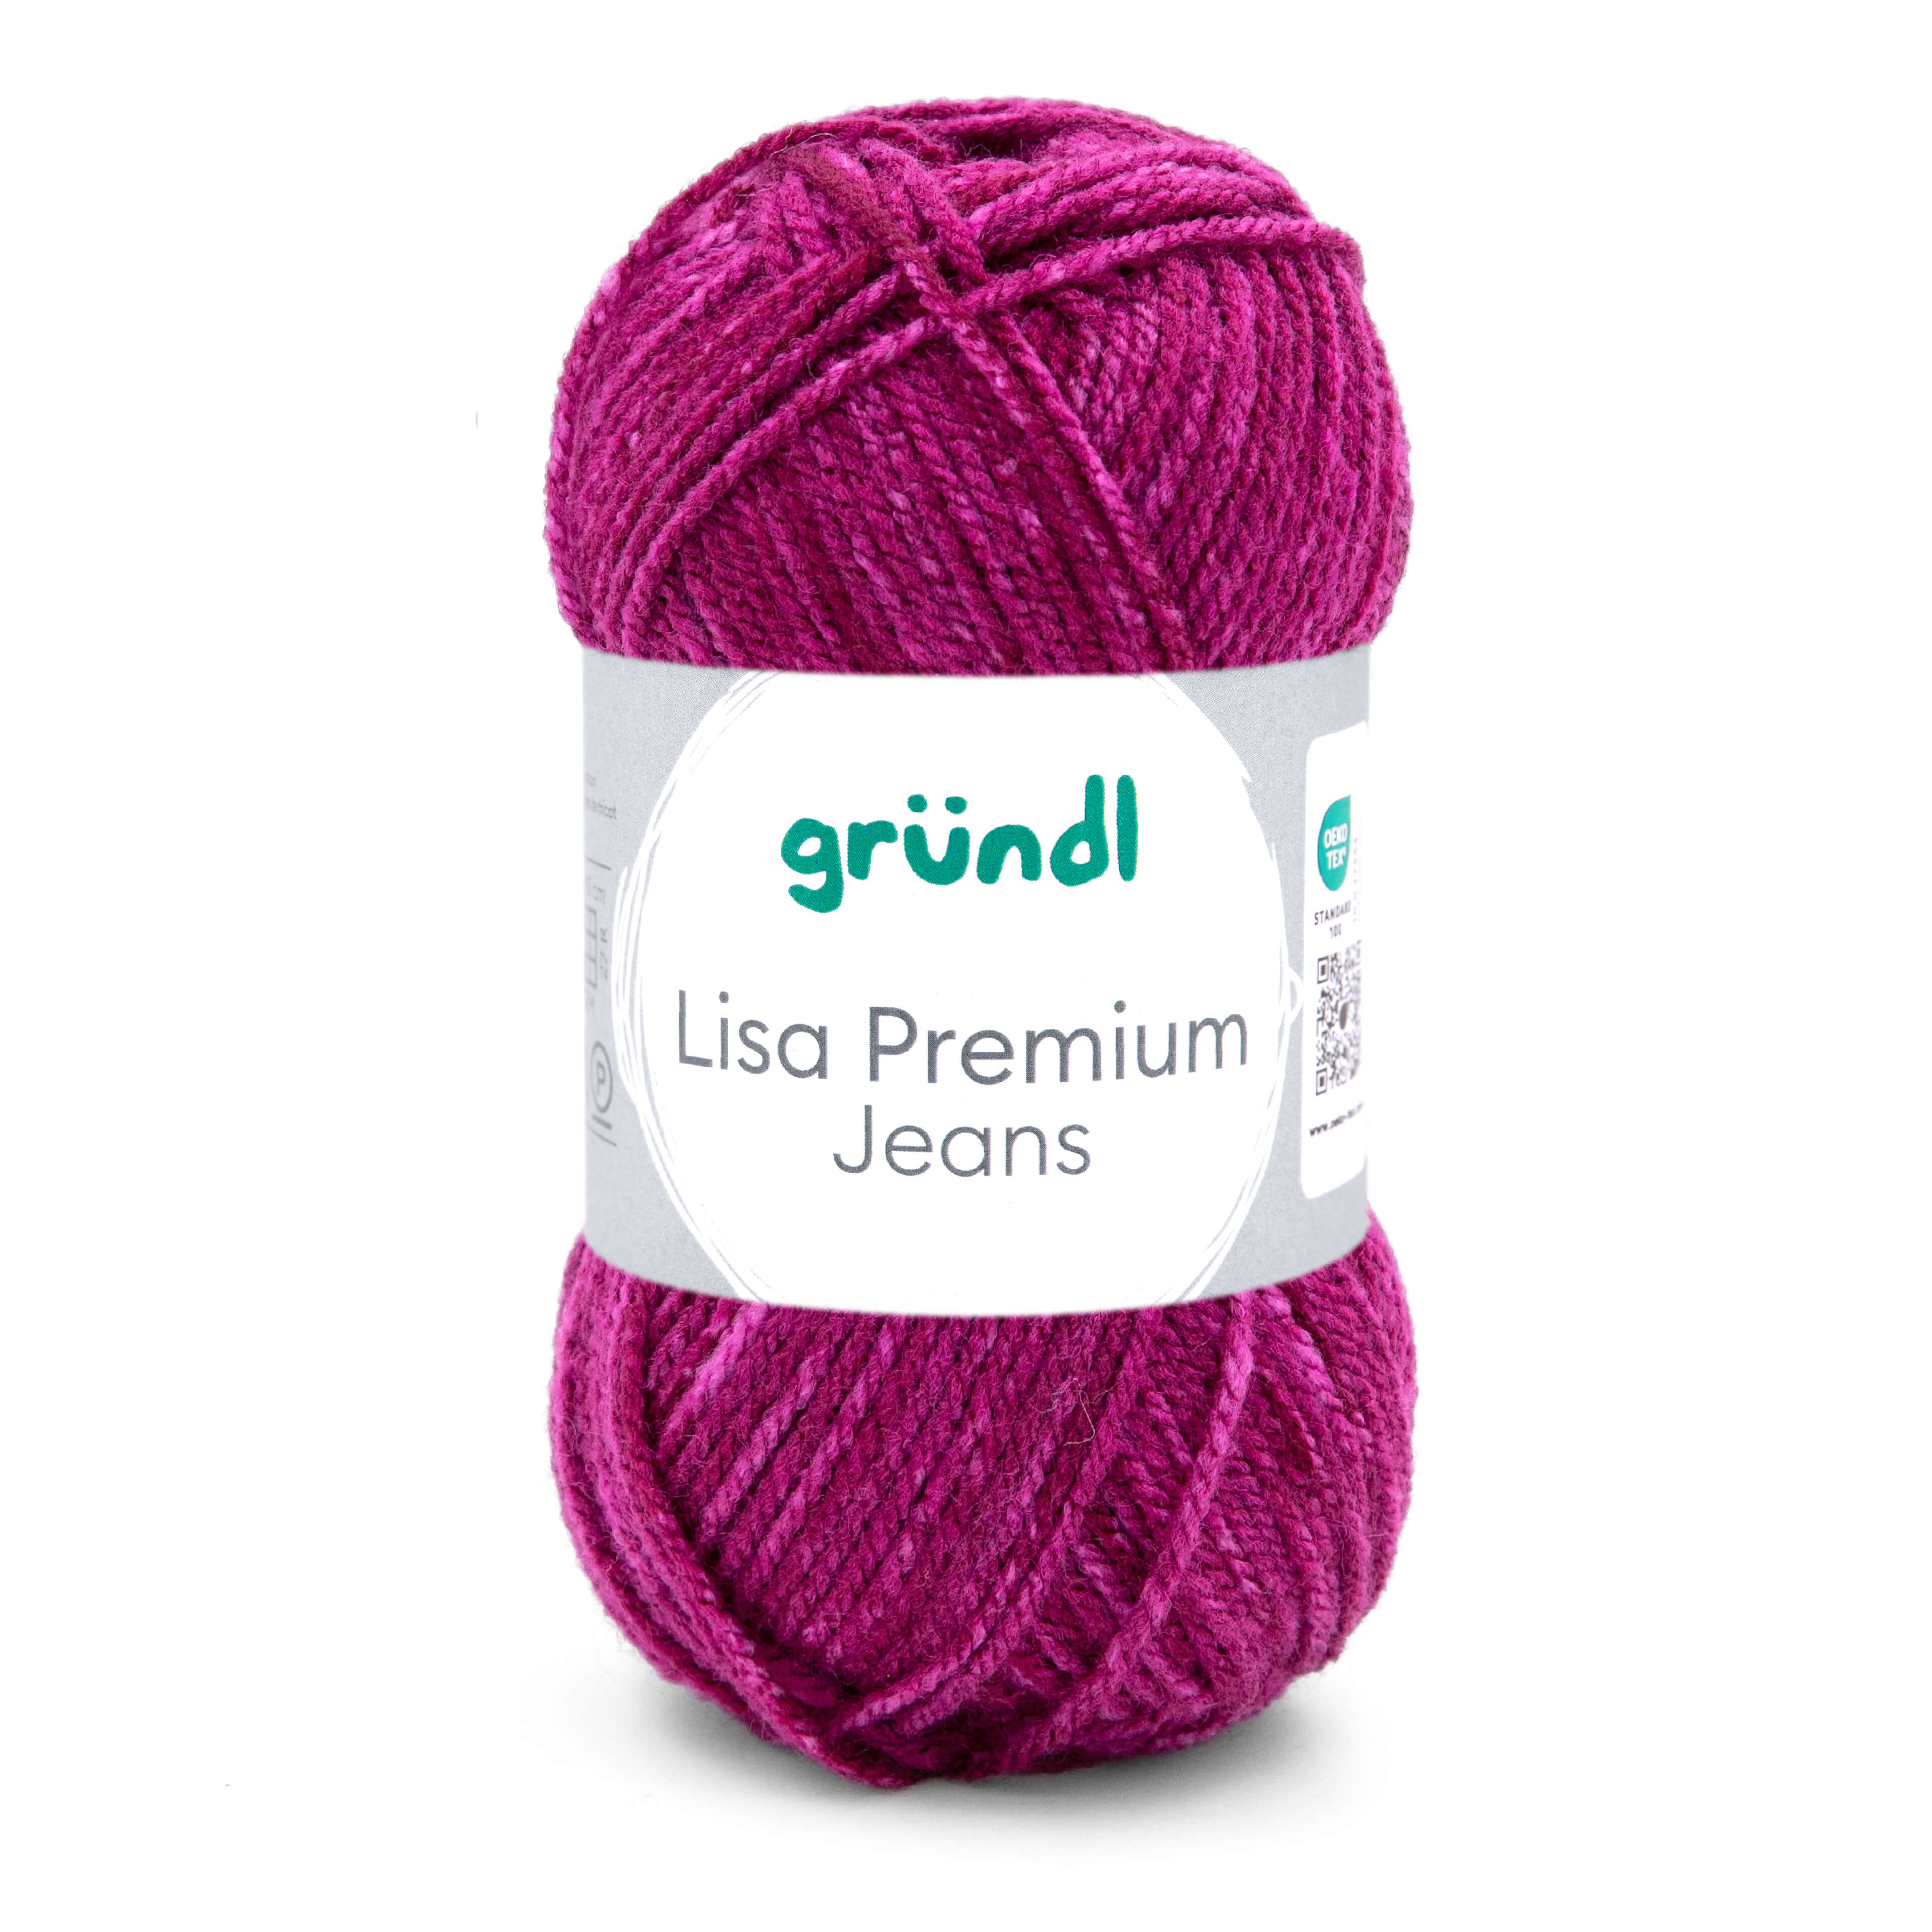 Lisa Premium Jeans